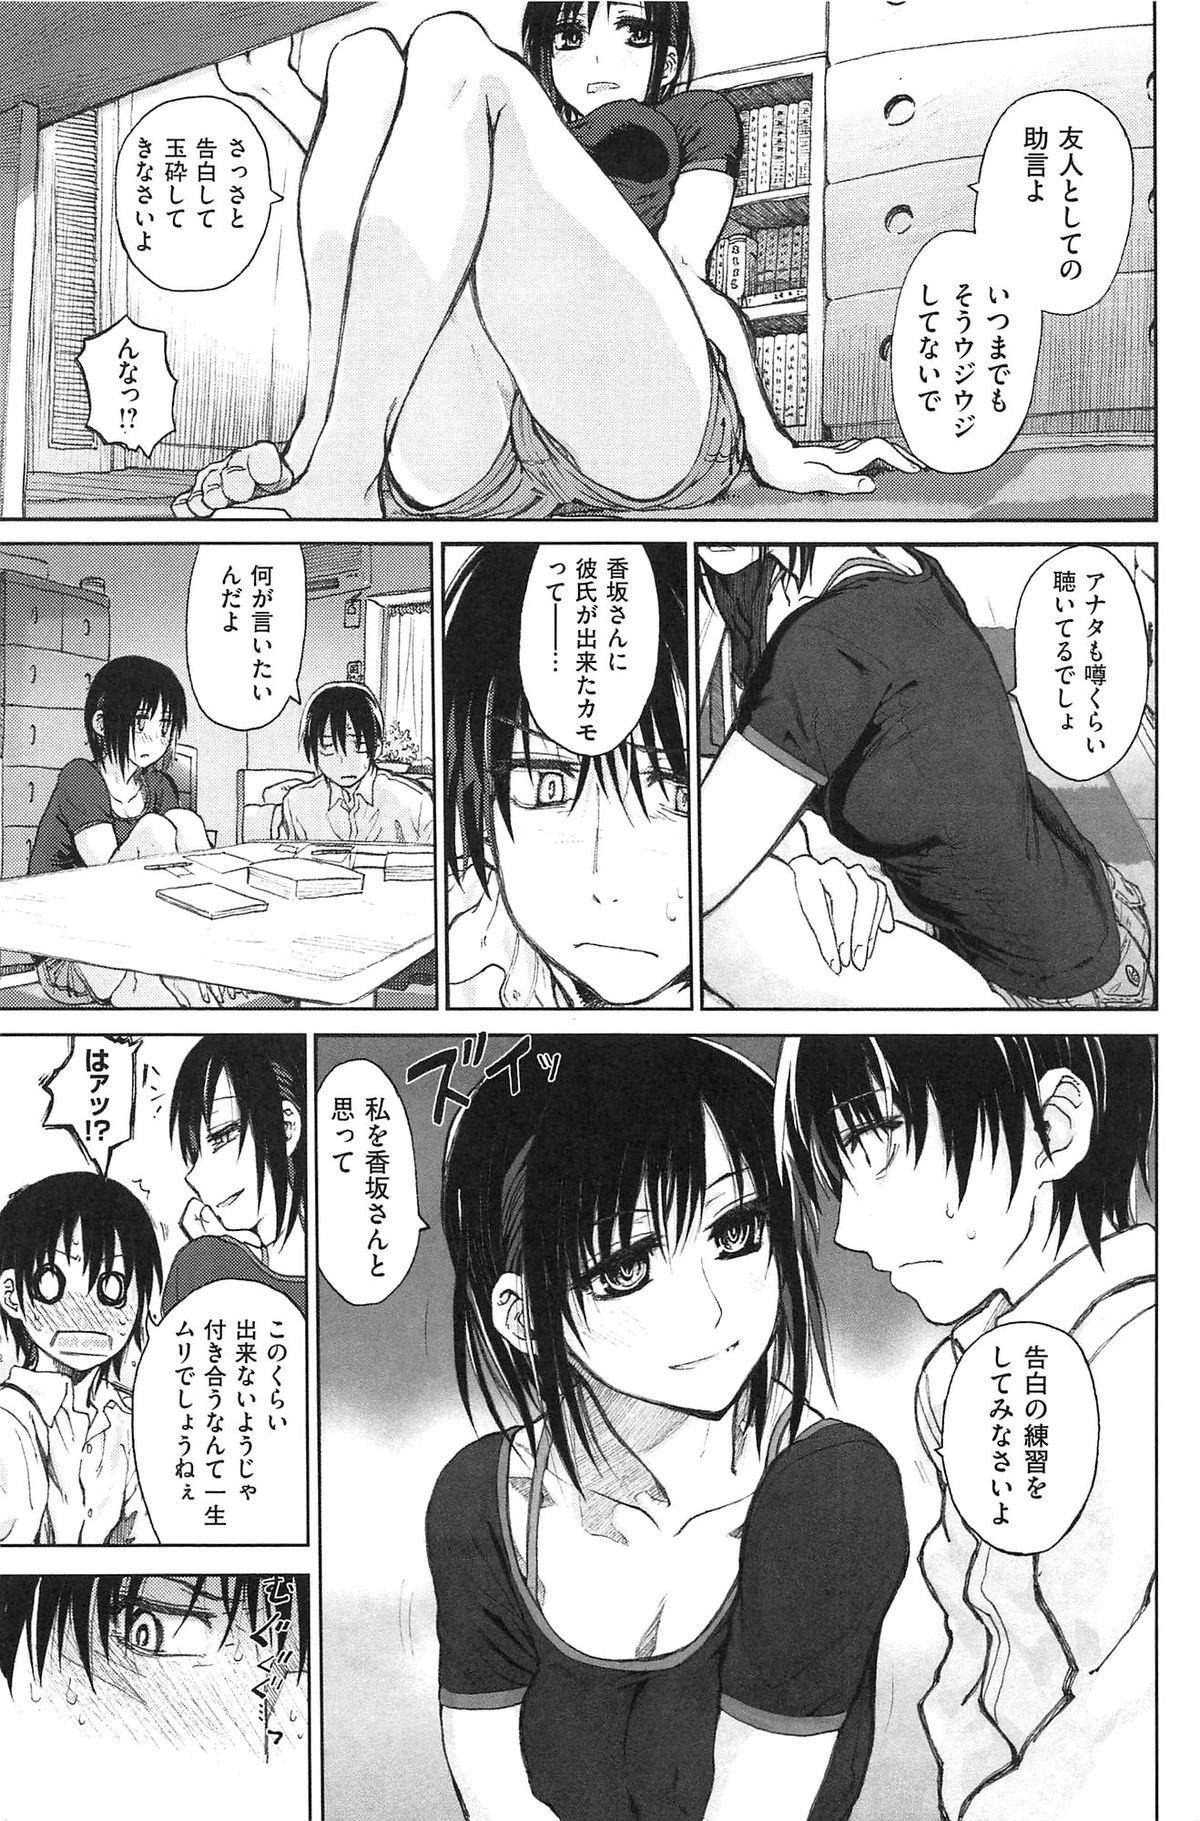 [Dagashi] Junketsu no Owaru Hibi (Beautiful Days of Losing Virginity) … (WANI MAGAZINE COMICS SPECIAL) 107